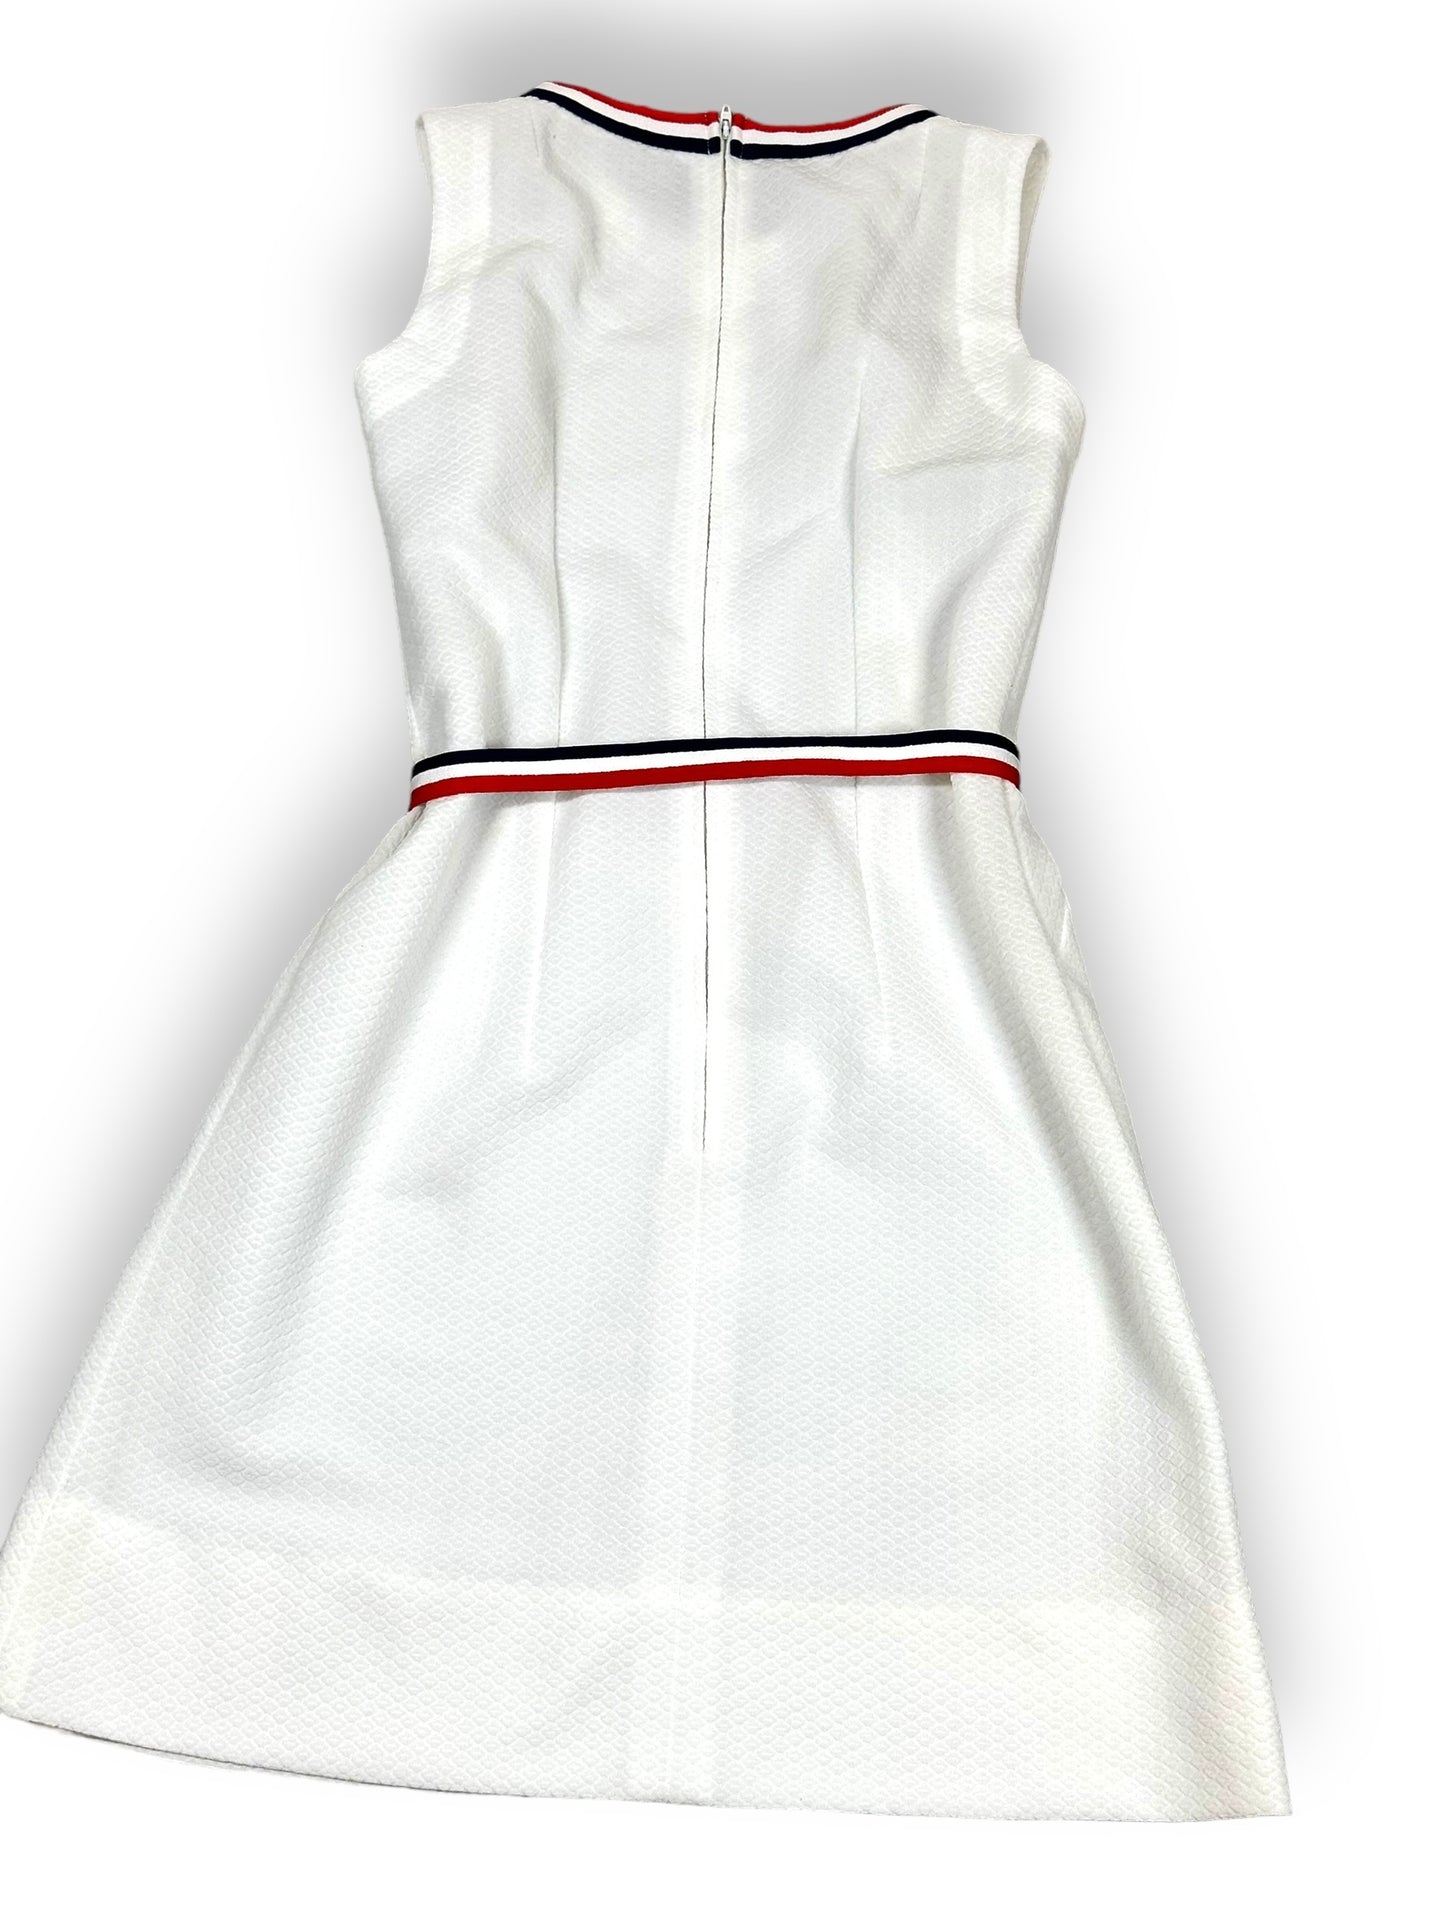 1970s White Mesh Belted Shift Dress